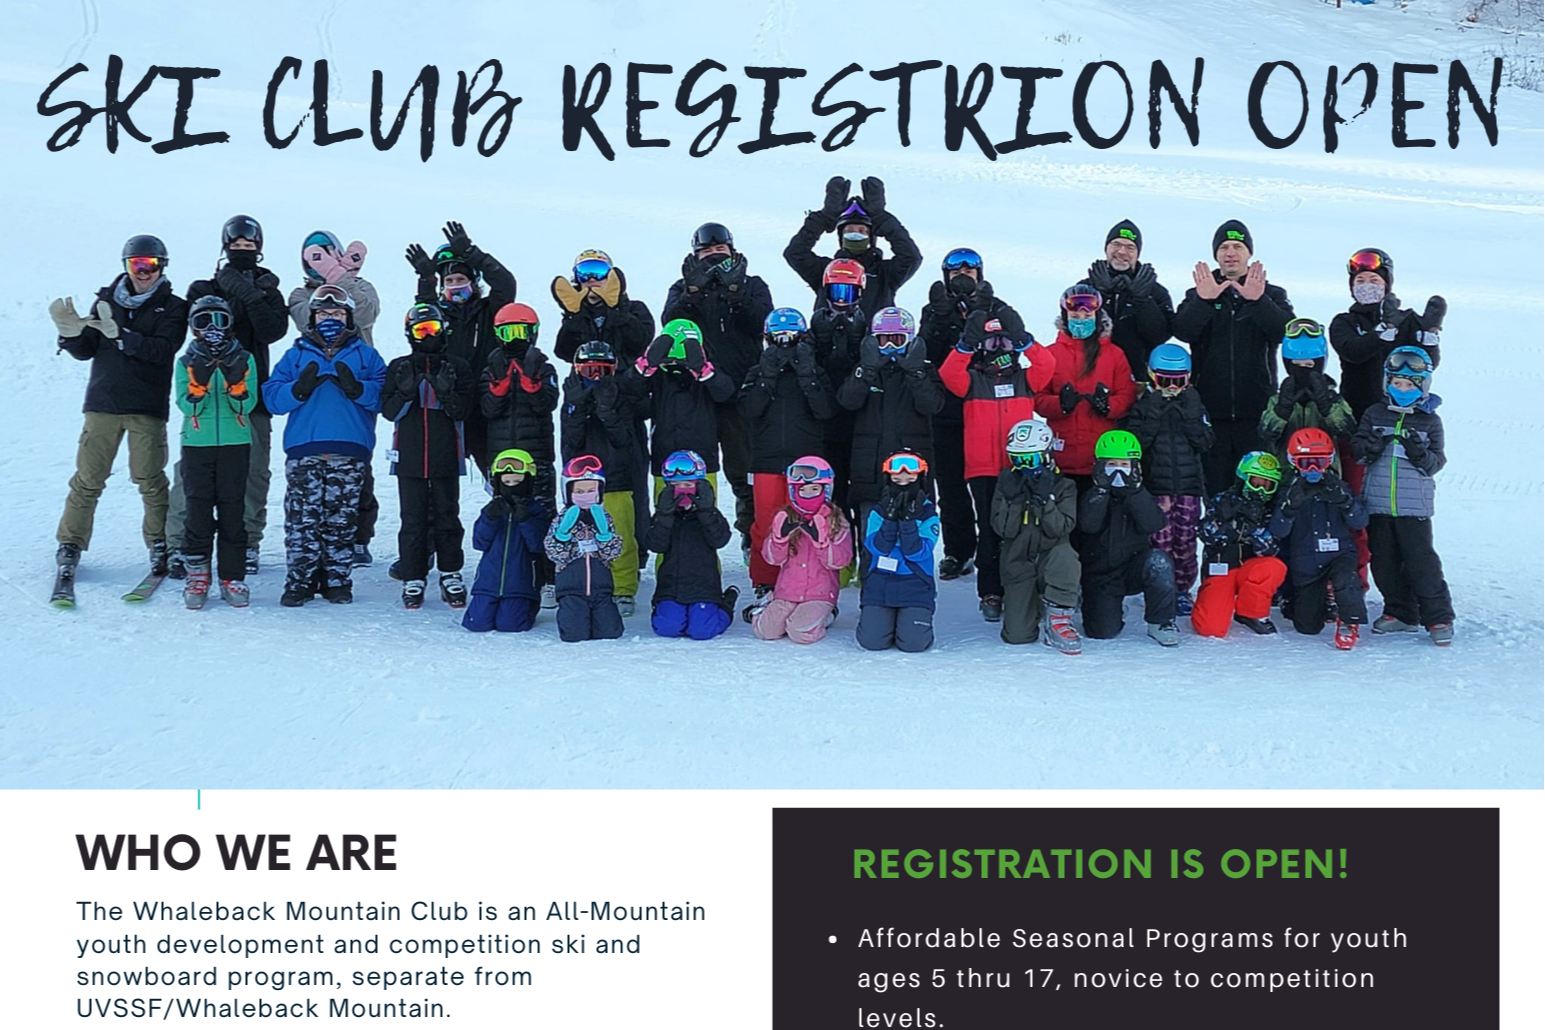 Ski- Club Registration Open